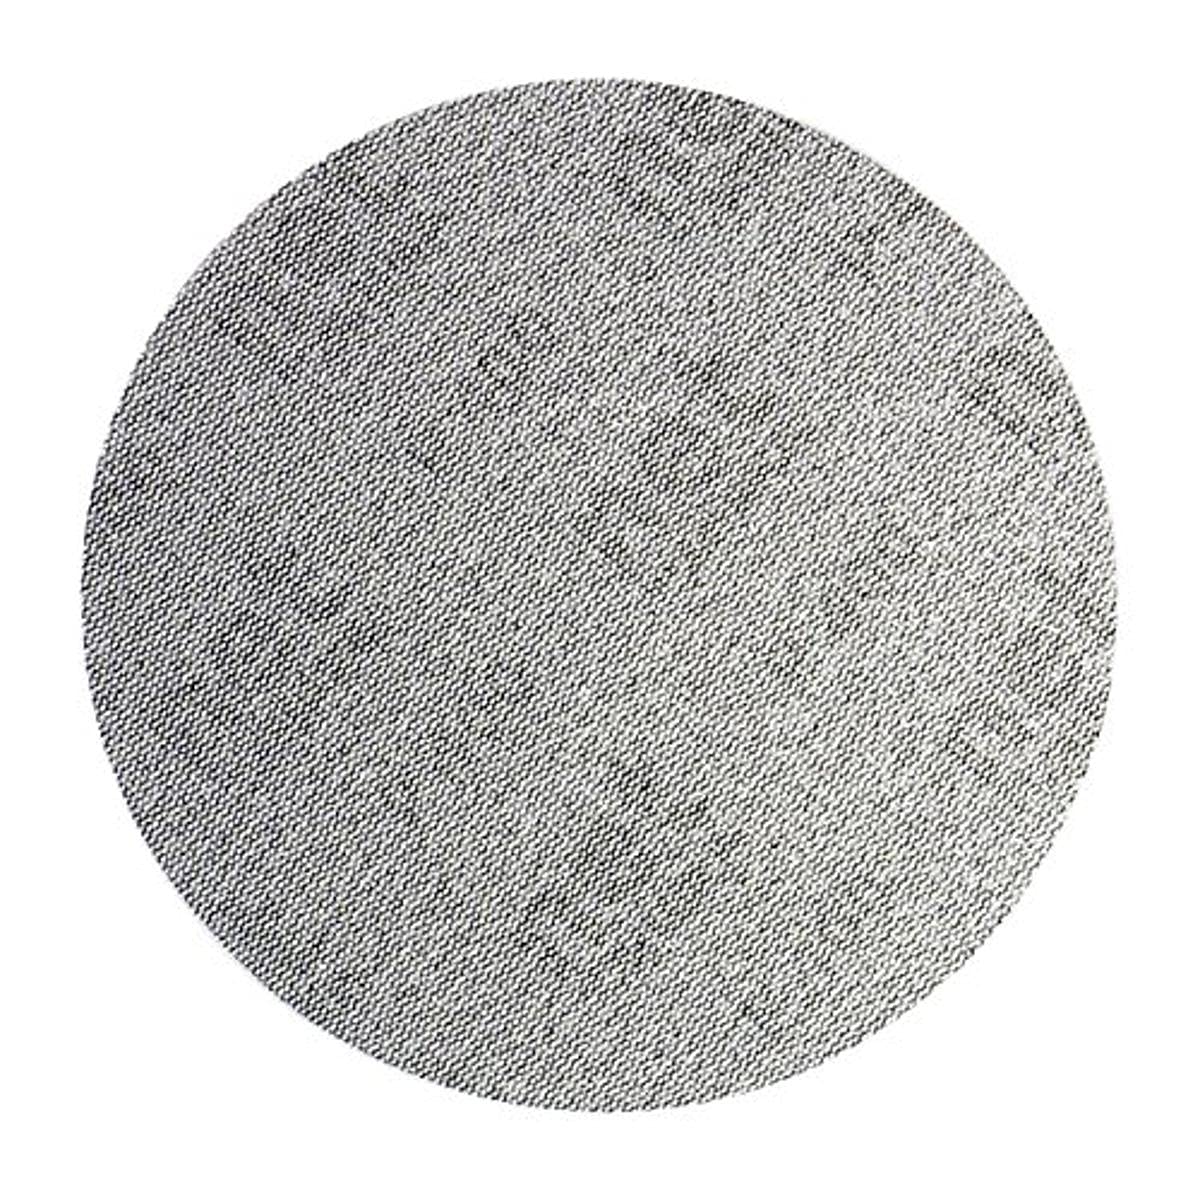 Mirka AE24105012 Autonet Sanding Disc - 150mm Grip - P120 Grit - Körnung: Aluminiumoxid auf Kunstharz über Kunstharz - PA Netz / PES Netz - Beschichtung: Geschlossen - Grau - Packung enthält 50 Stück von MIRKA